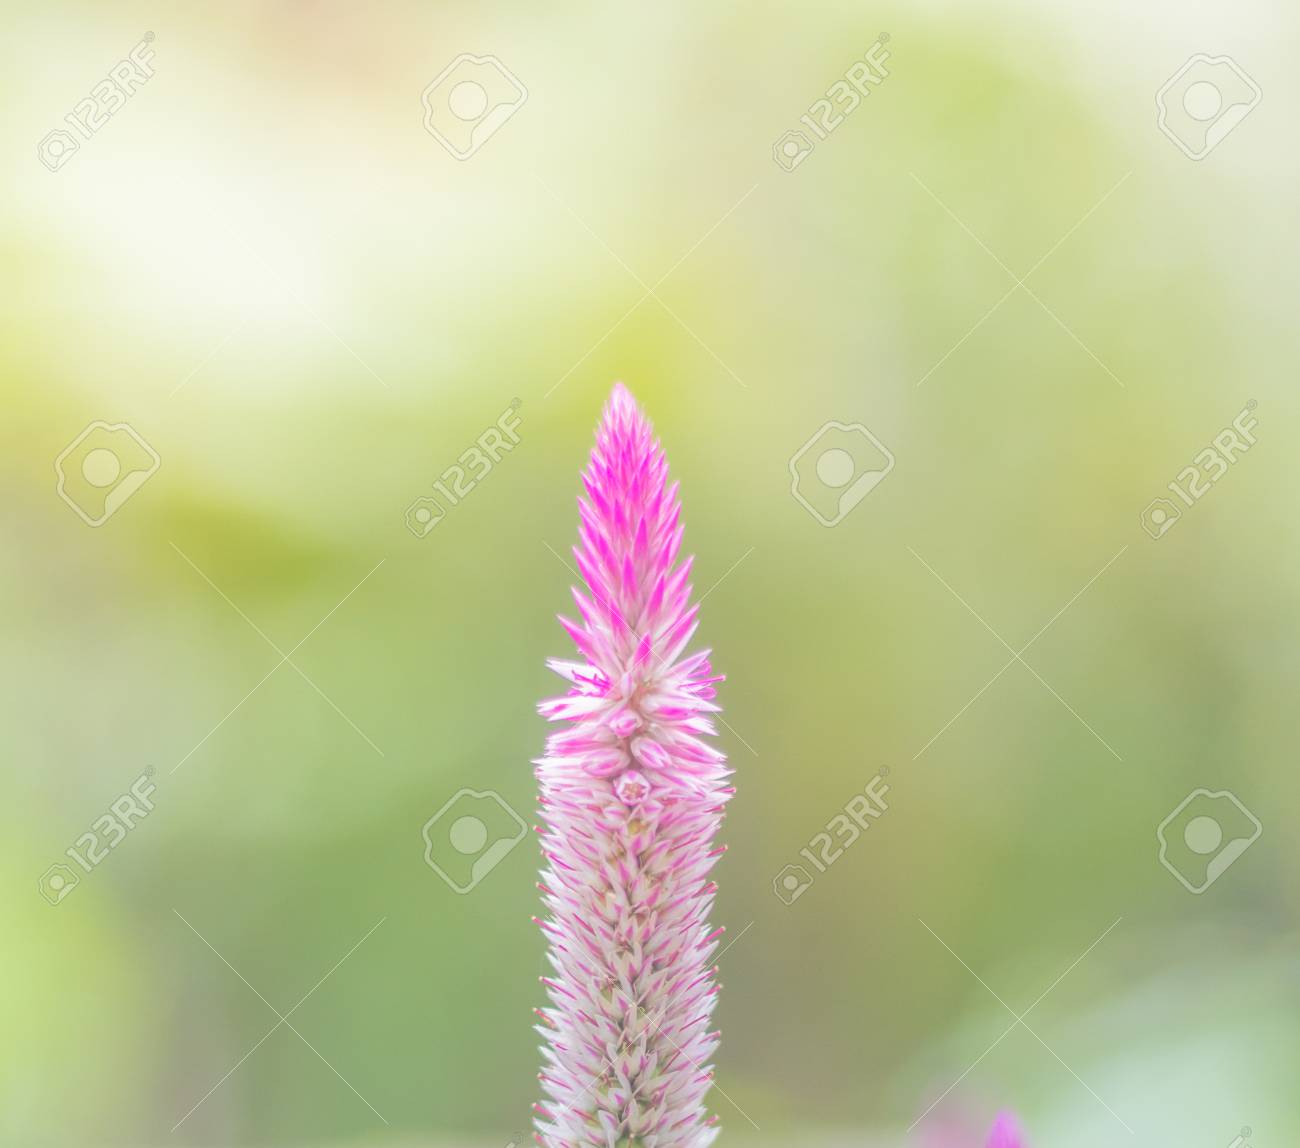 Celosia Argentea Purple And White Flower Beautiful Pink